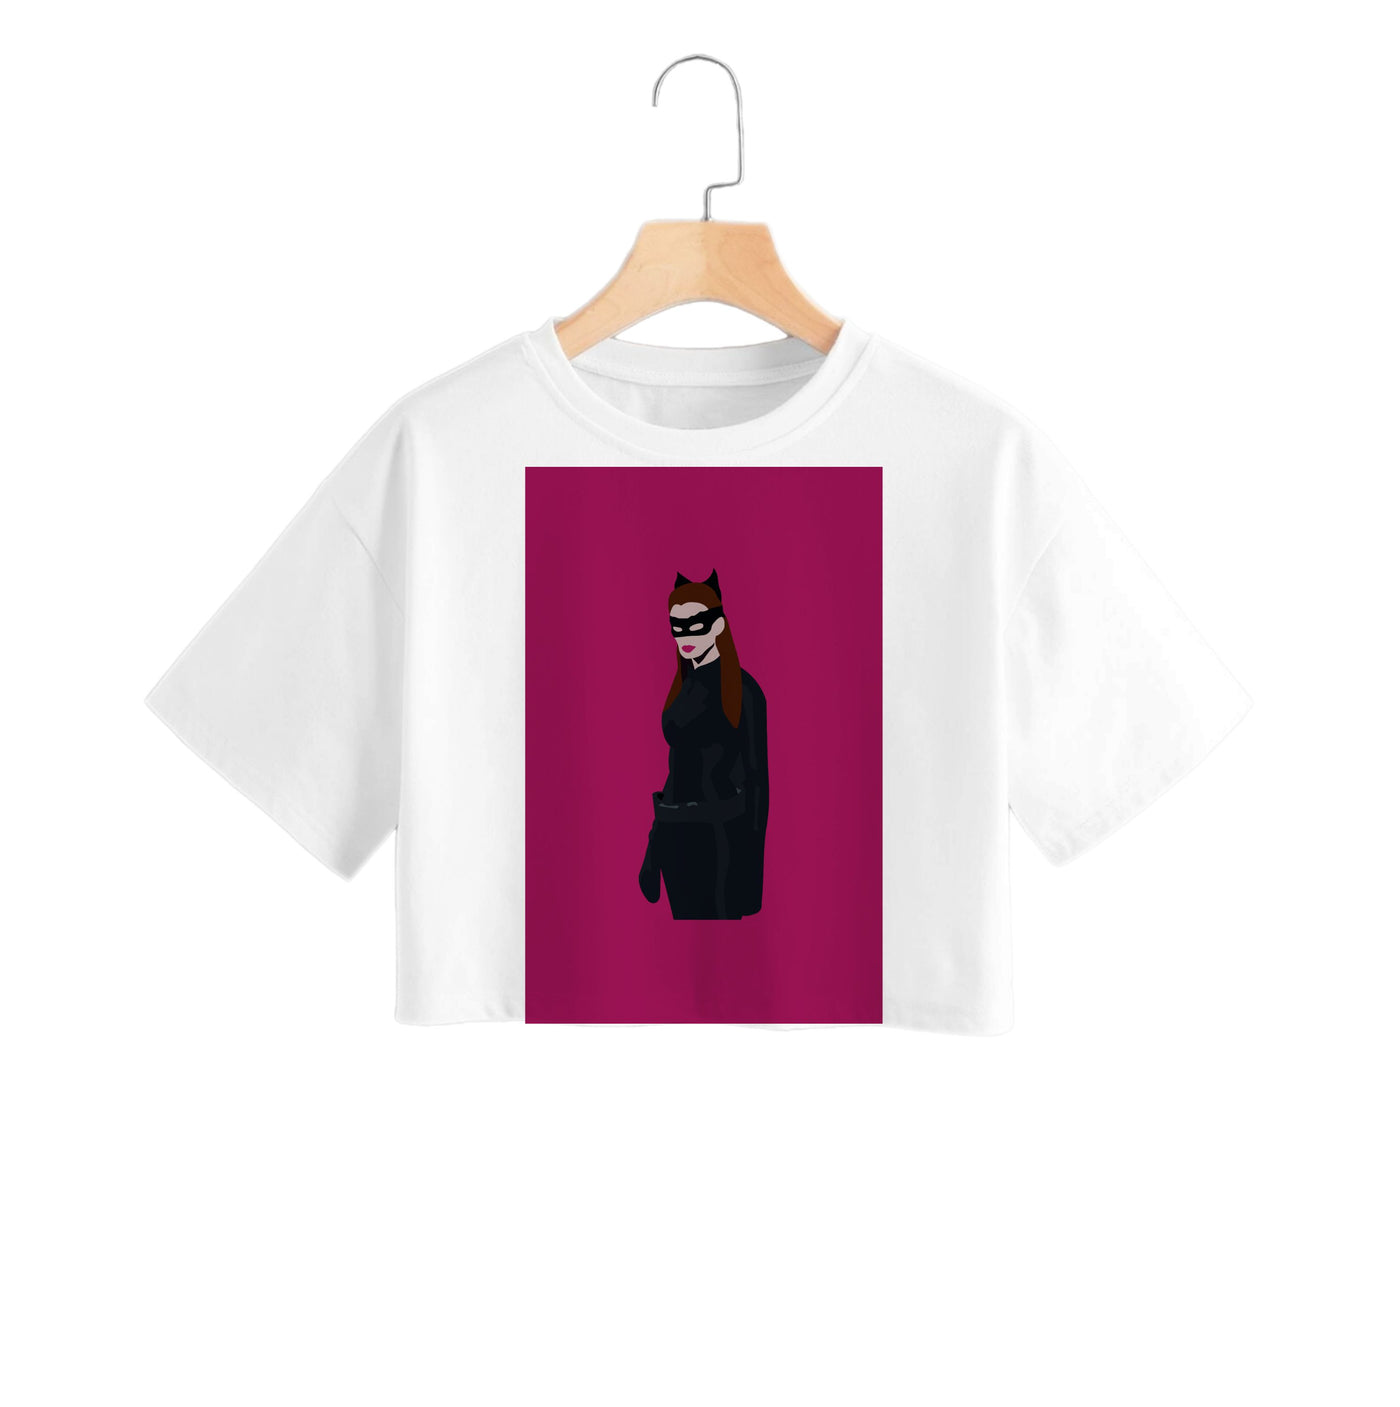 Catwoman - Batman Crop Top